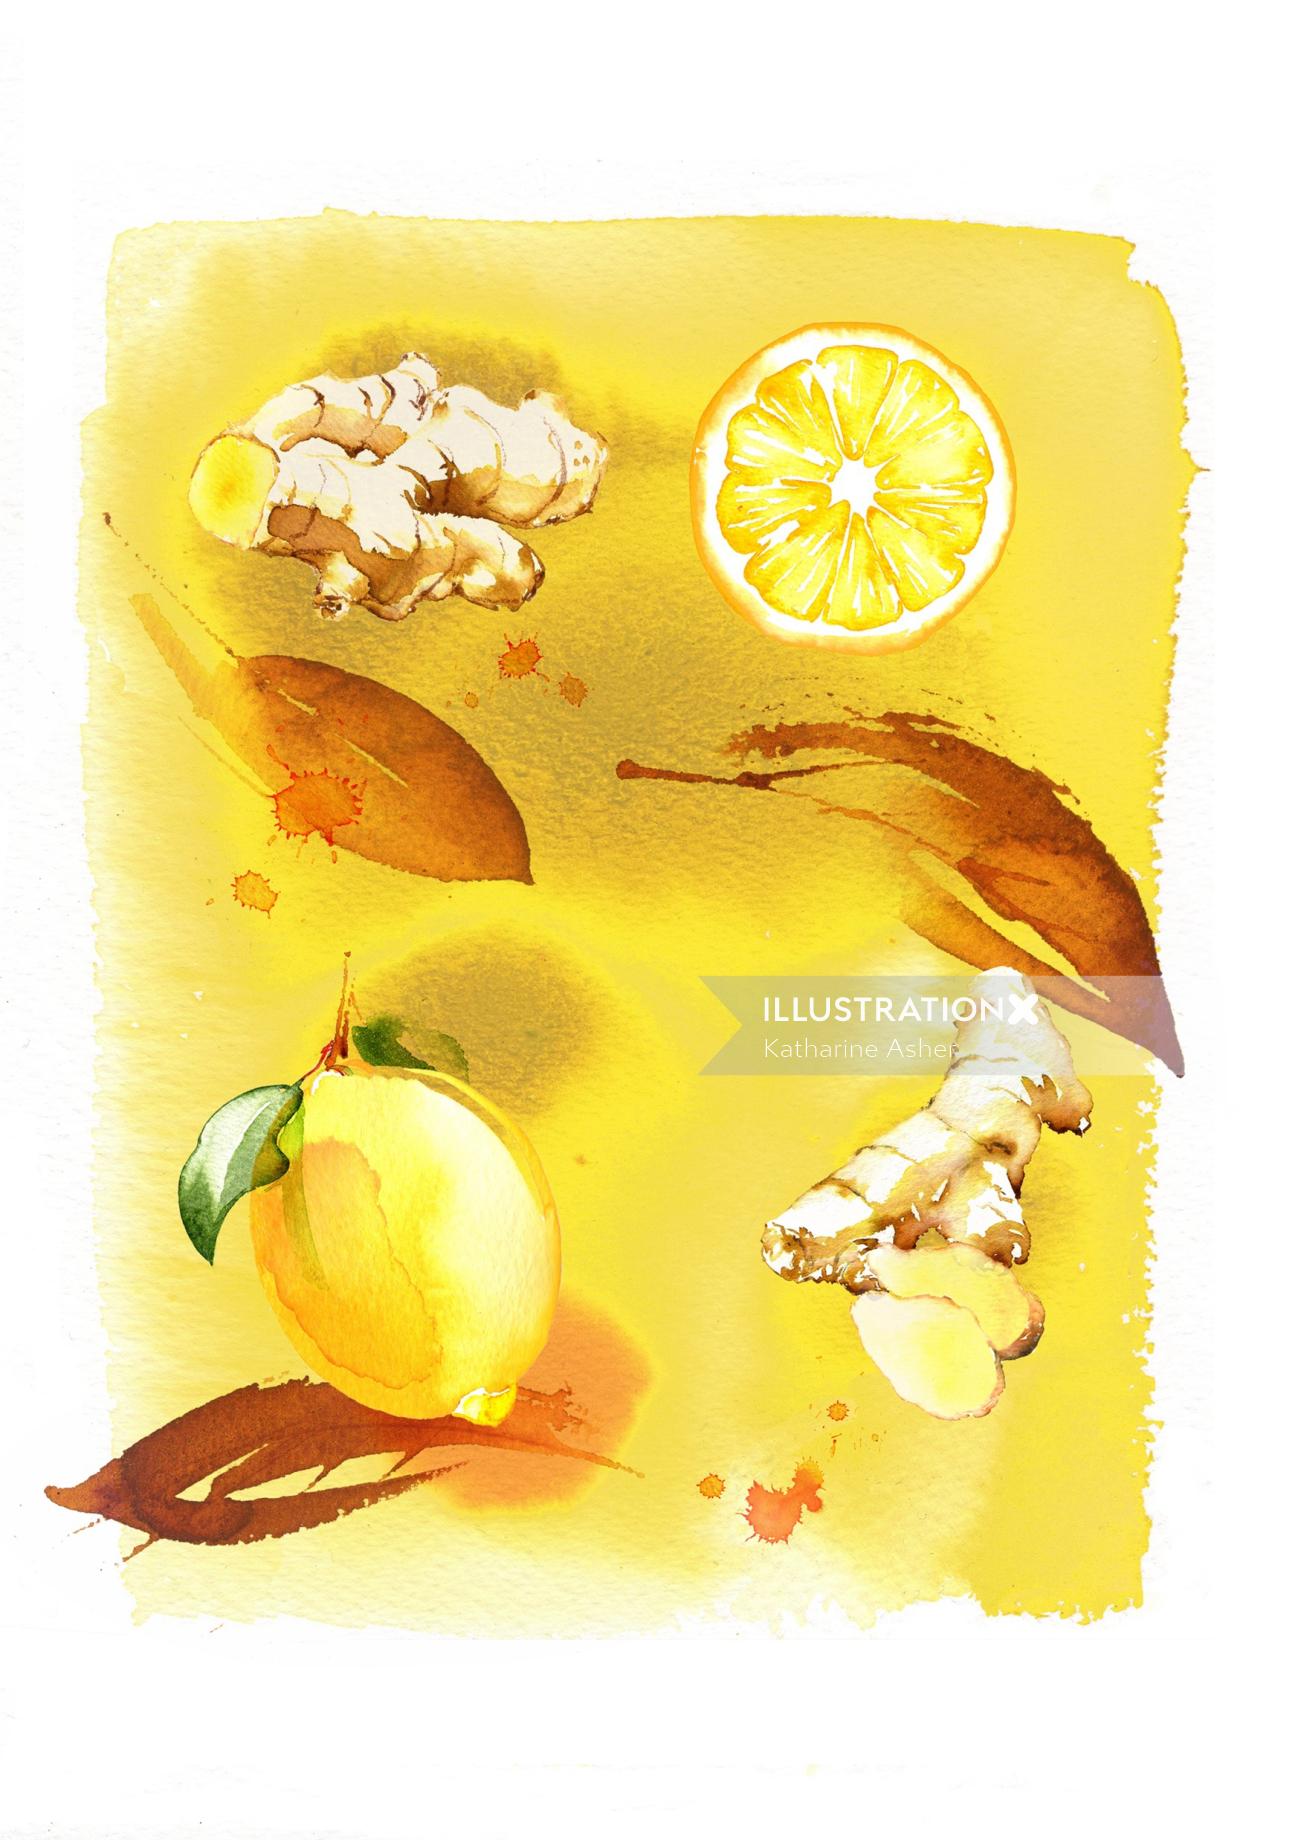 Illustration aquarelle citron gingembre